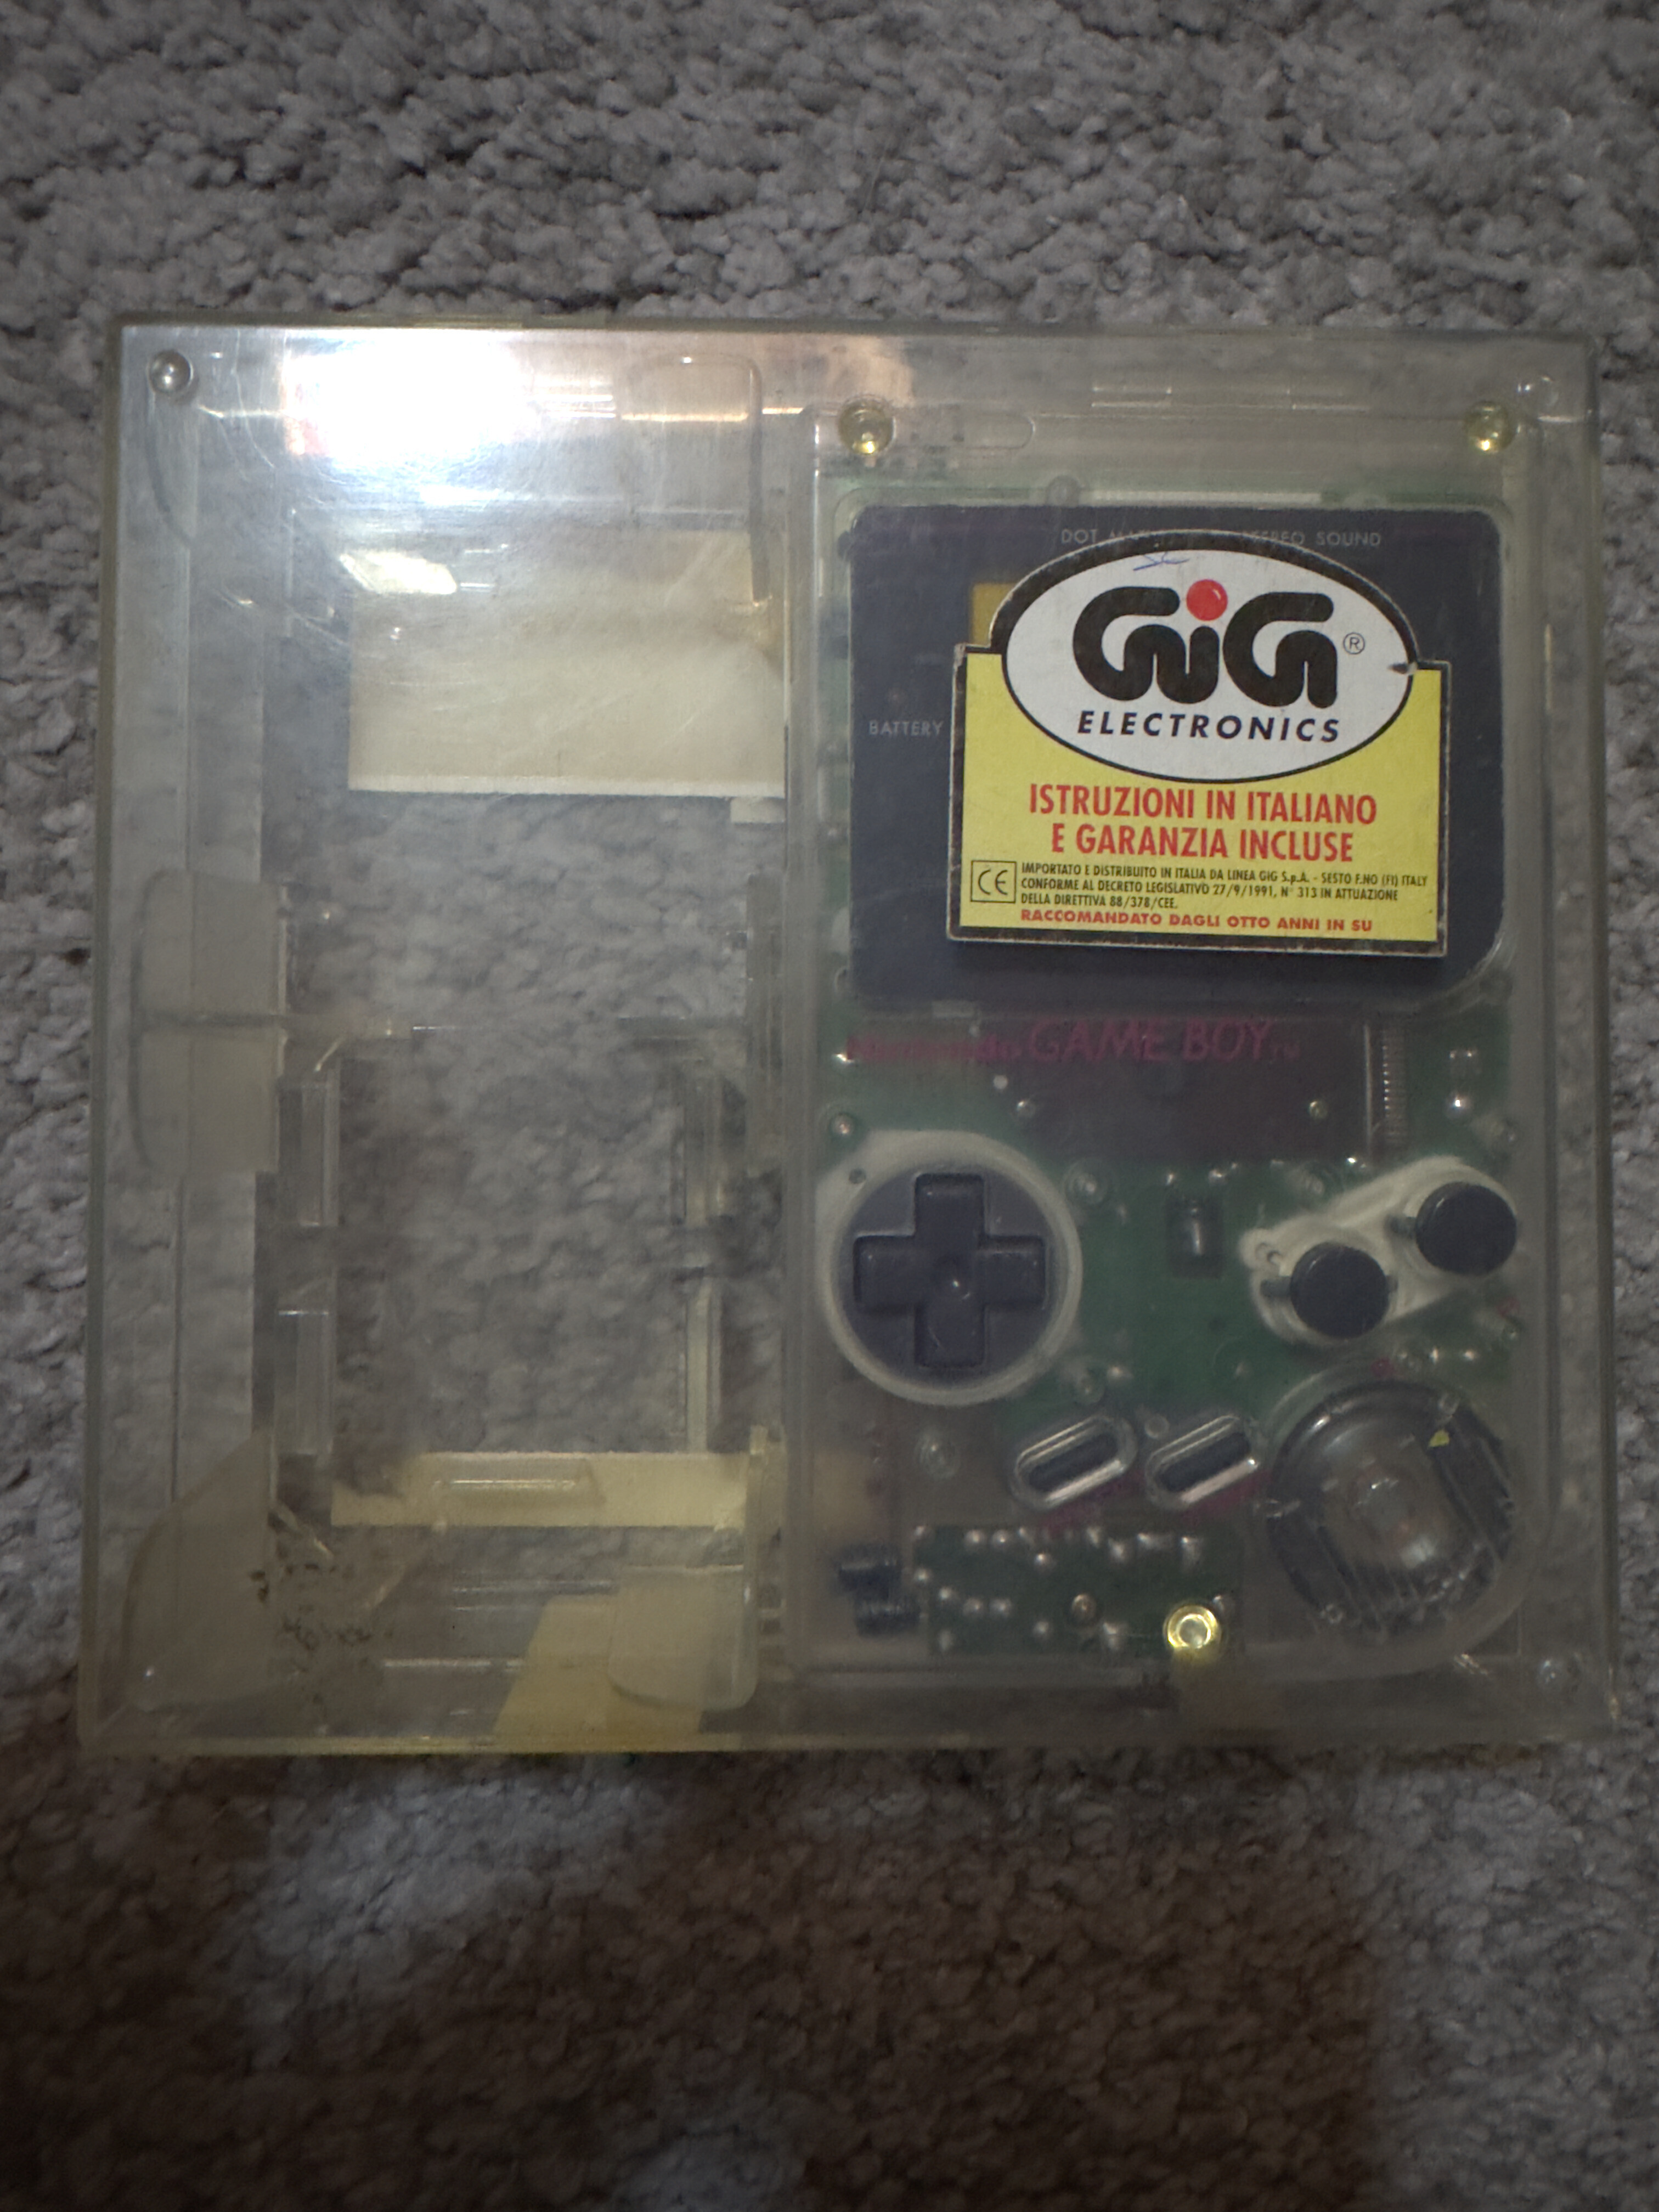  Nintendo Game Boy High Tech Transparent GIG Console [IT]